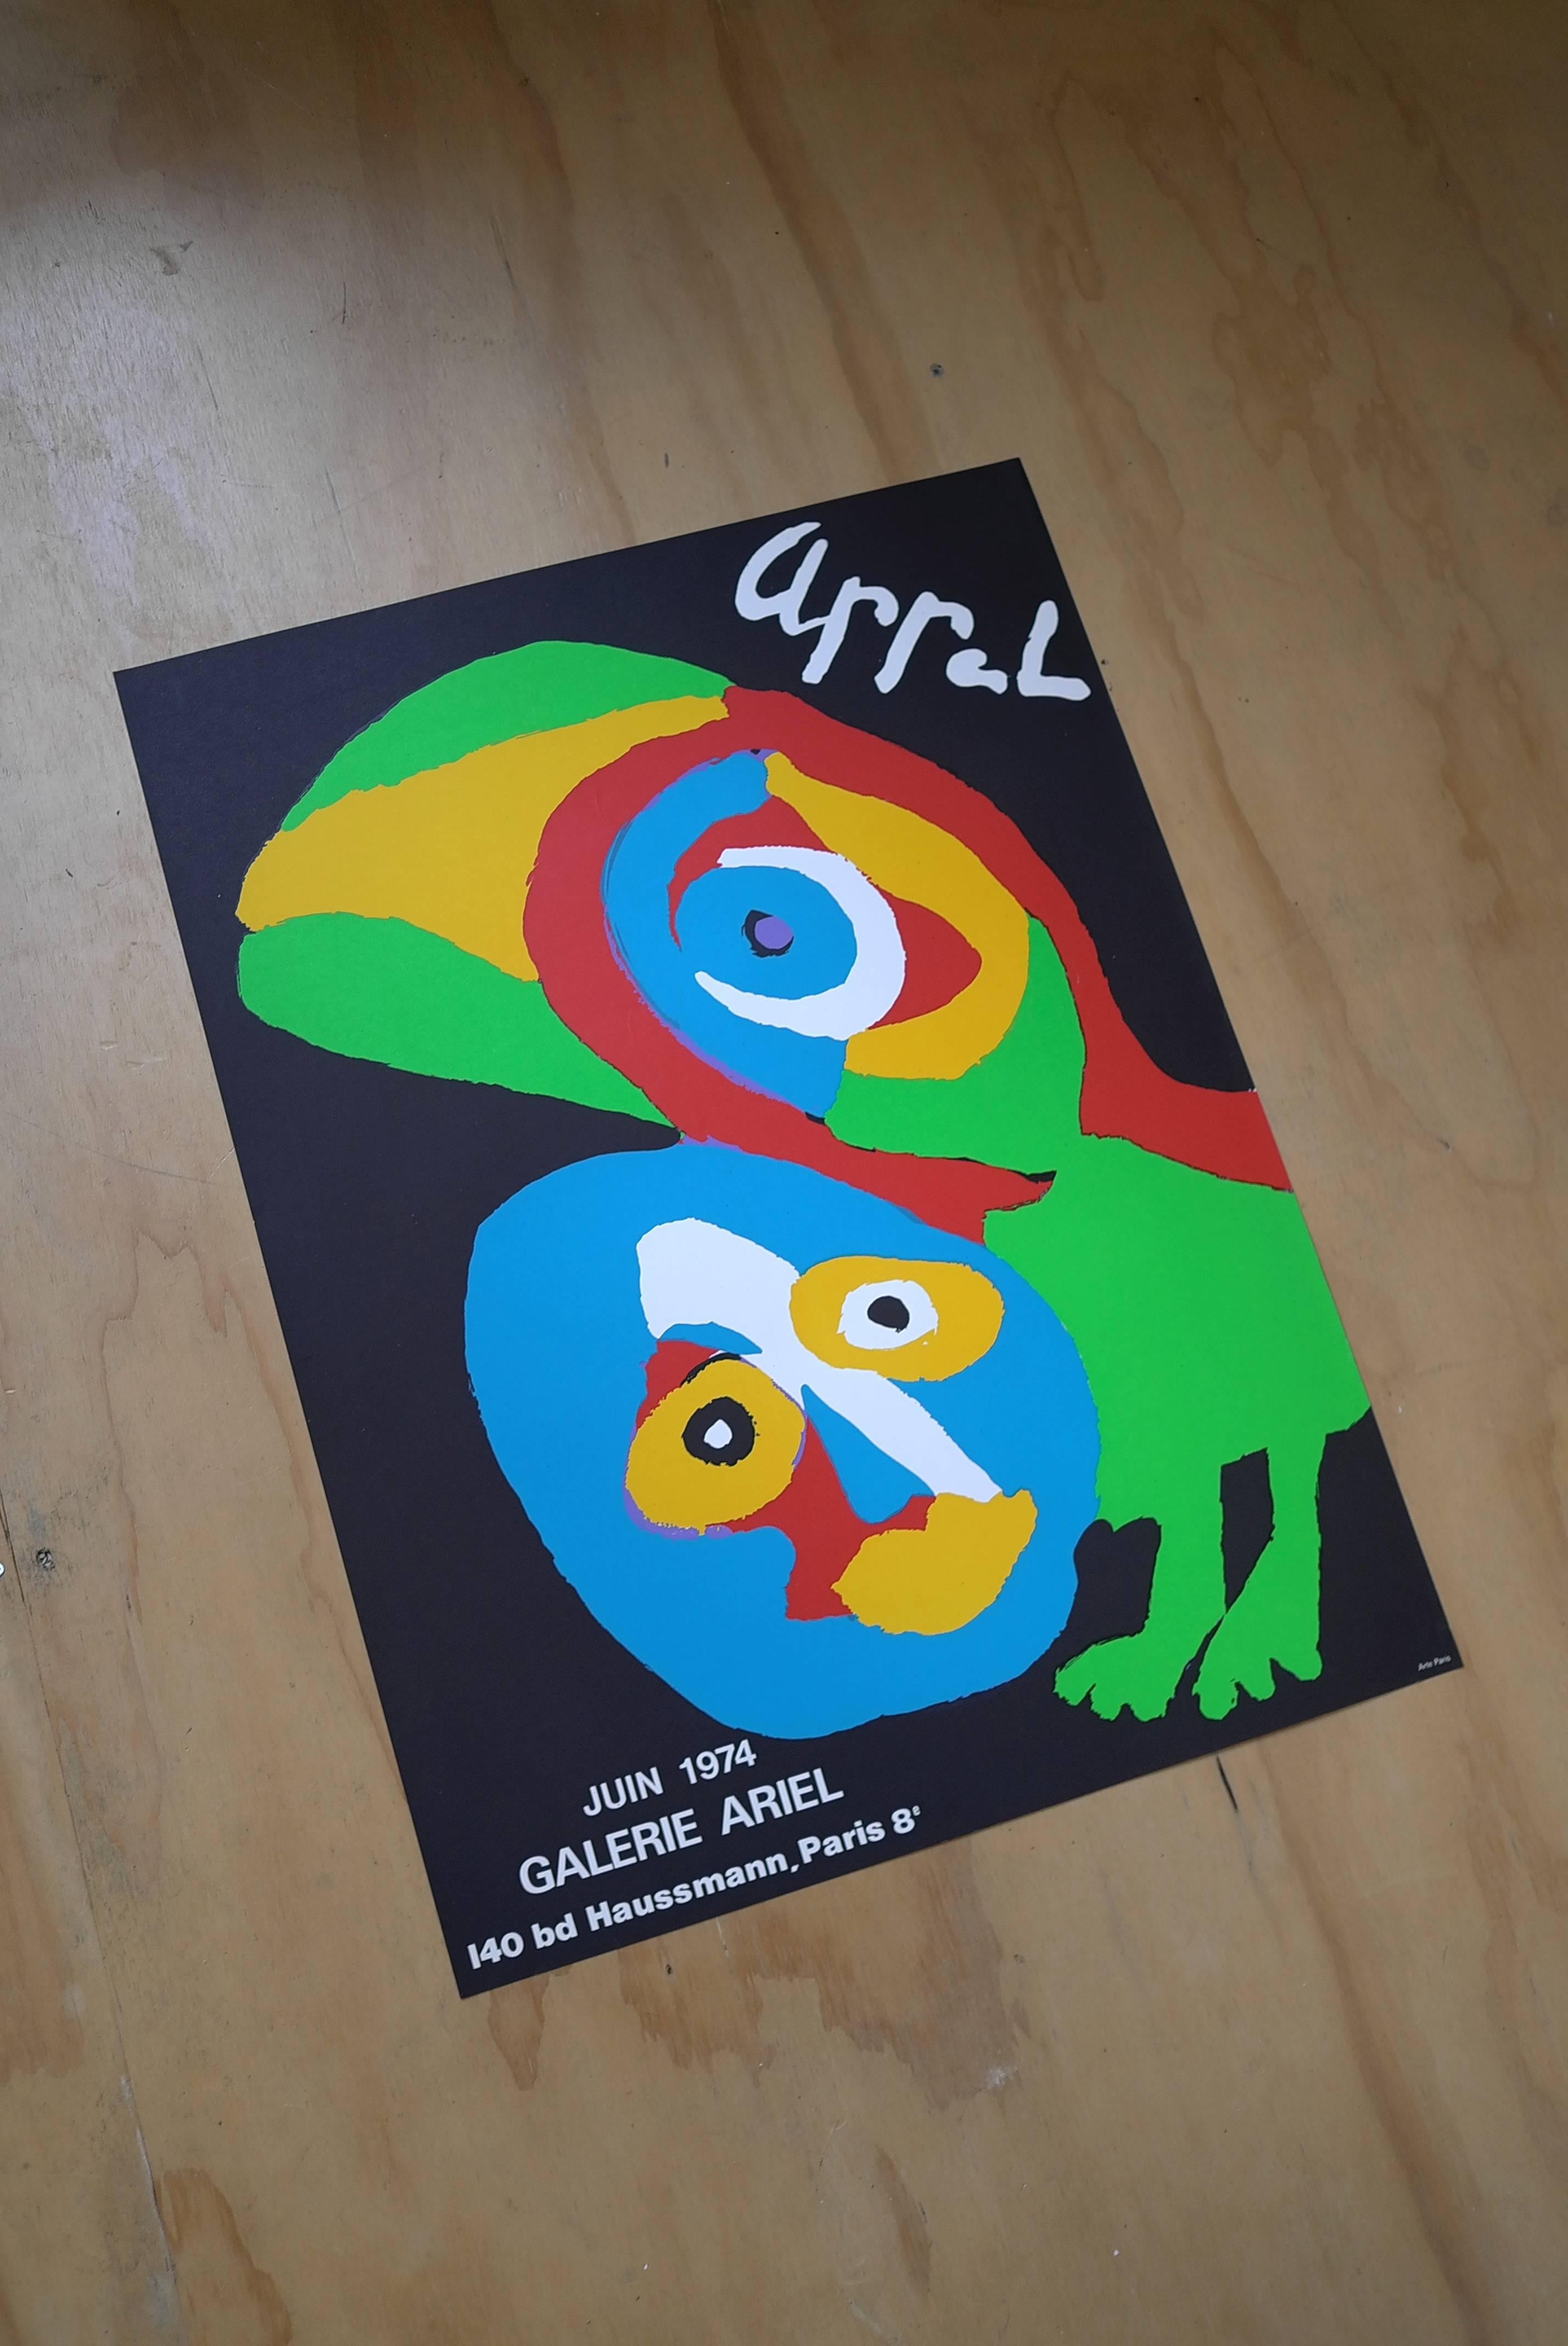 Karel Appel New Old Stock litho Poster, Galerie Ariel,  Paris 1974
Parrot Image,  printed by Arte Paris